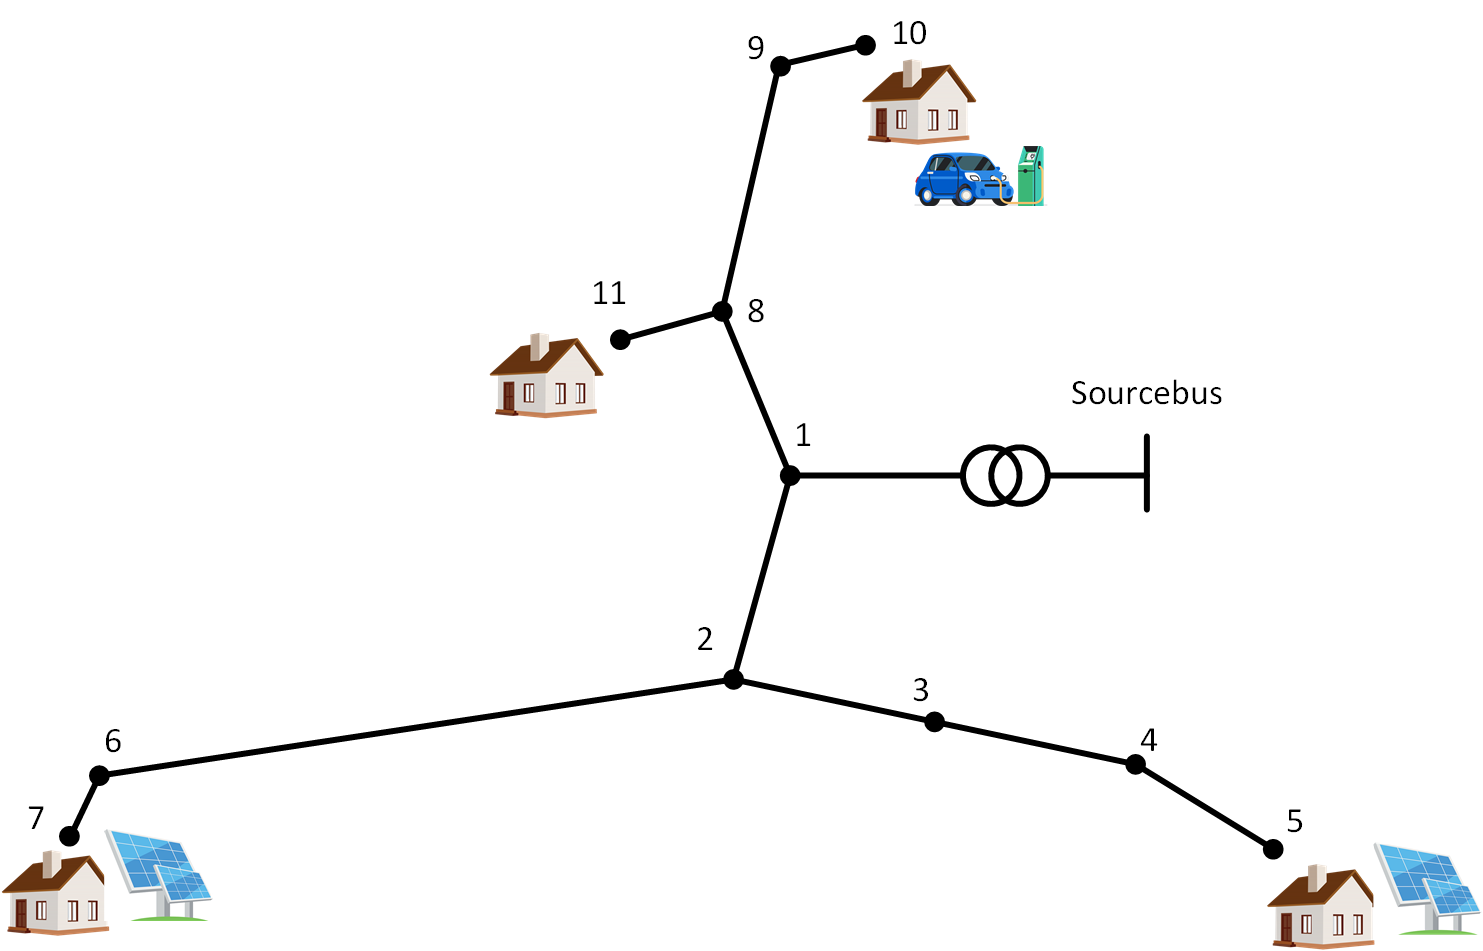 A diagram for the network for the EC demo scenario